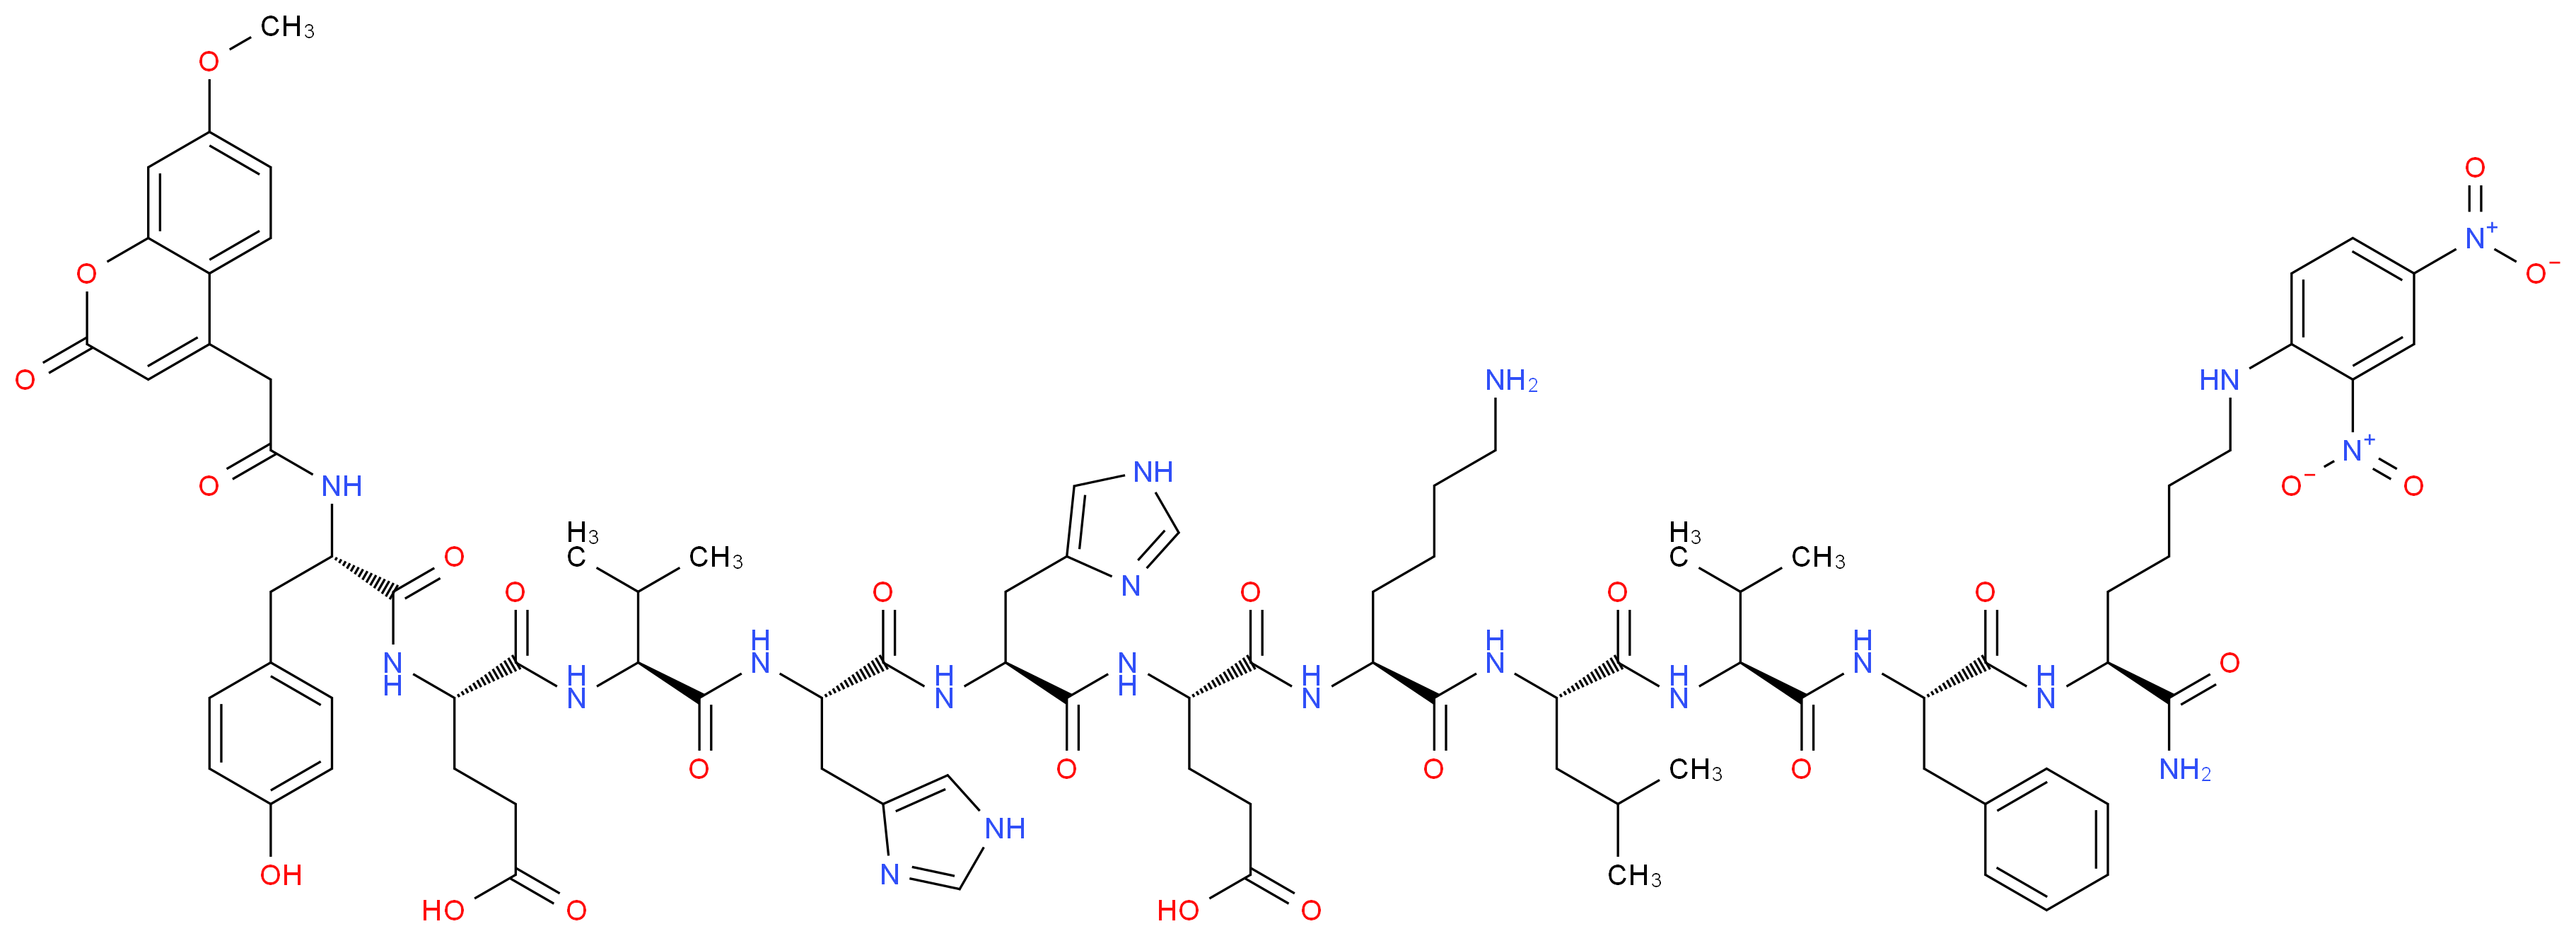 Nh2- molecular shape